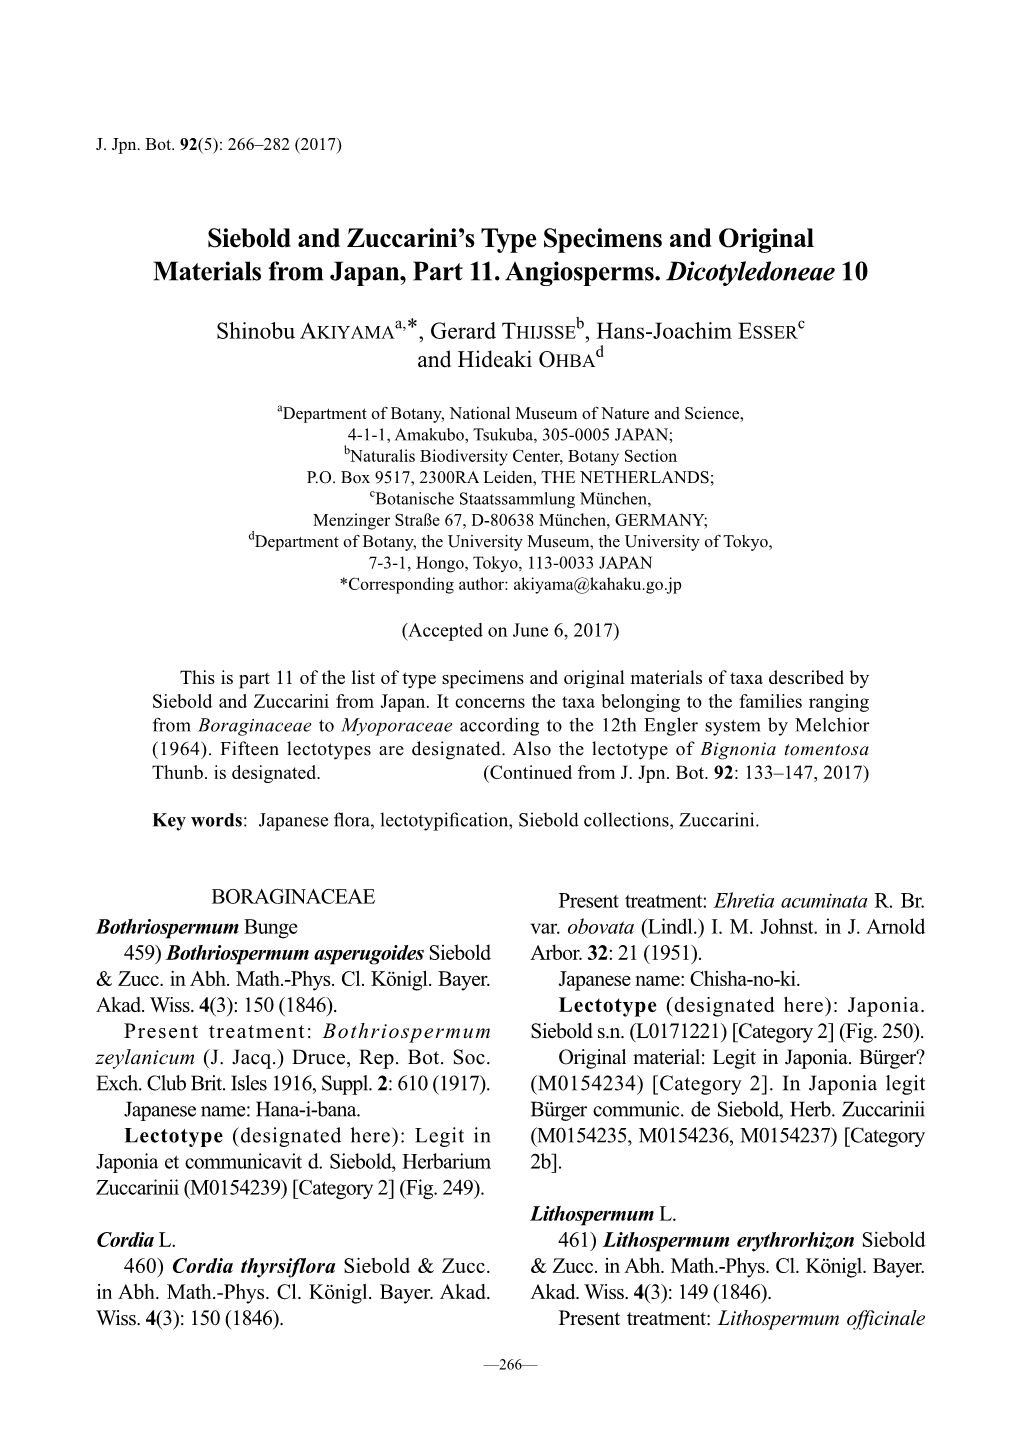 Siebold and Zuccarini's Type Specimens and Original Materials